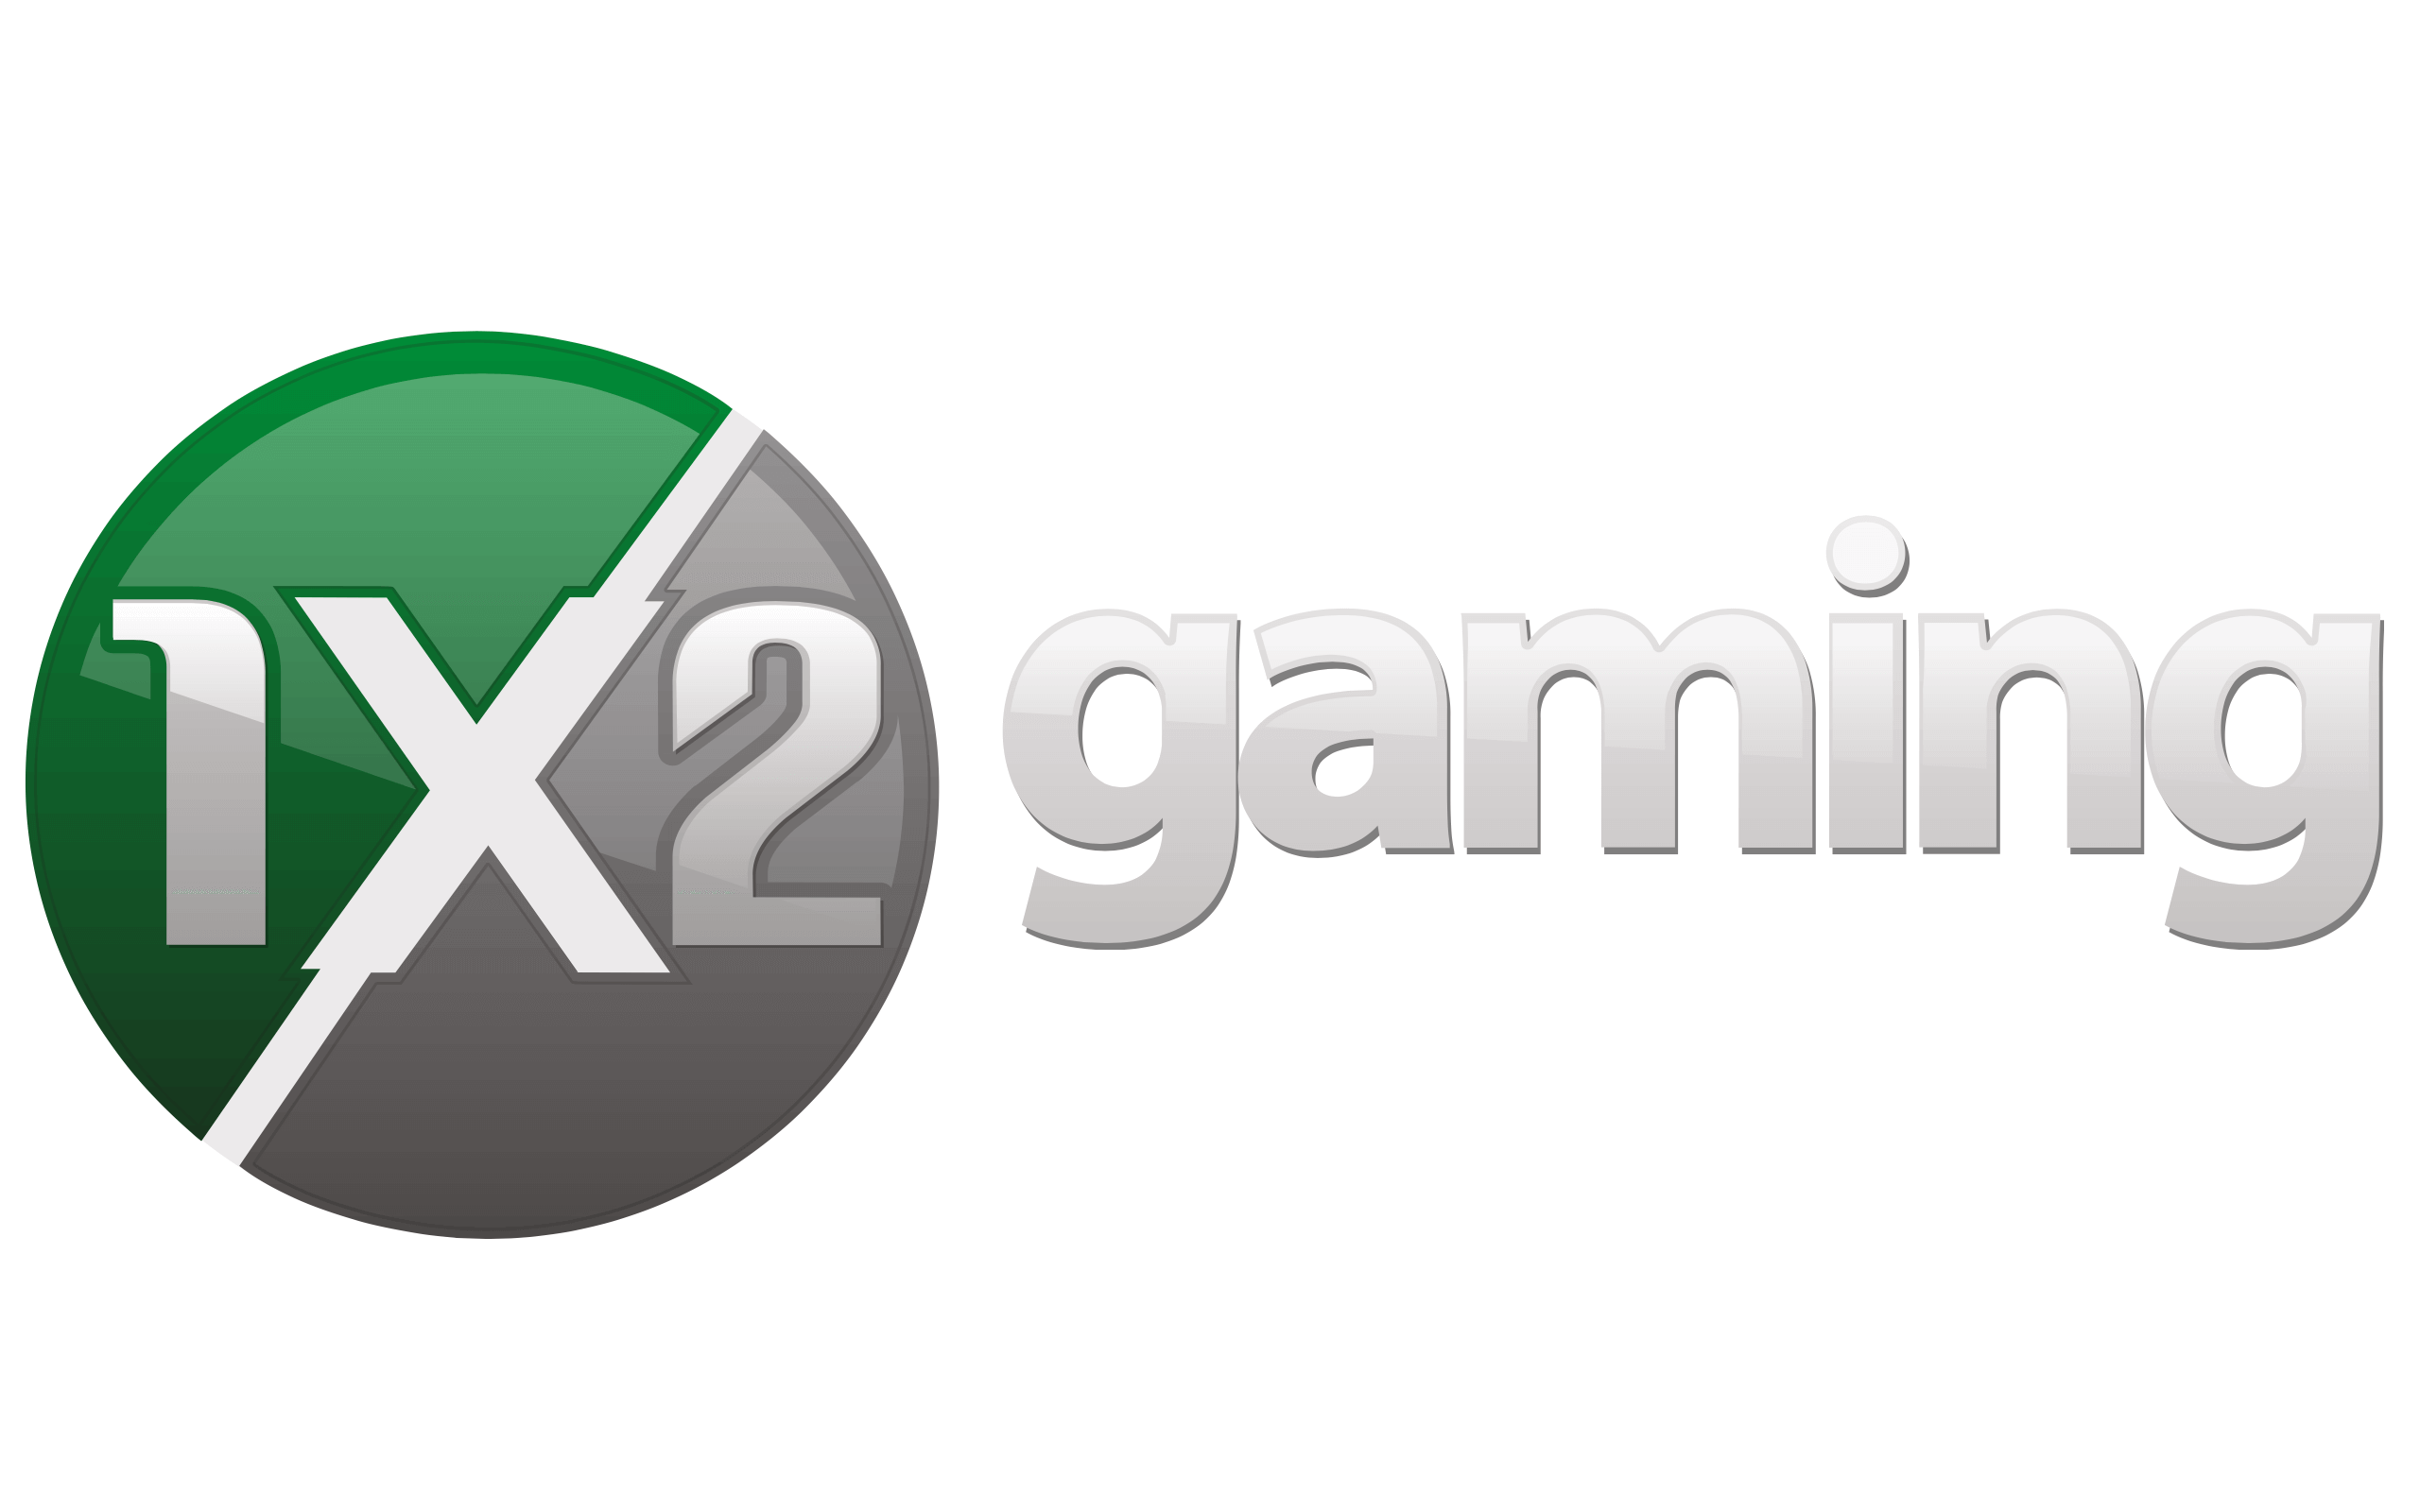 1X2 Gaming software review – online casino games, slots & virtual football